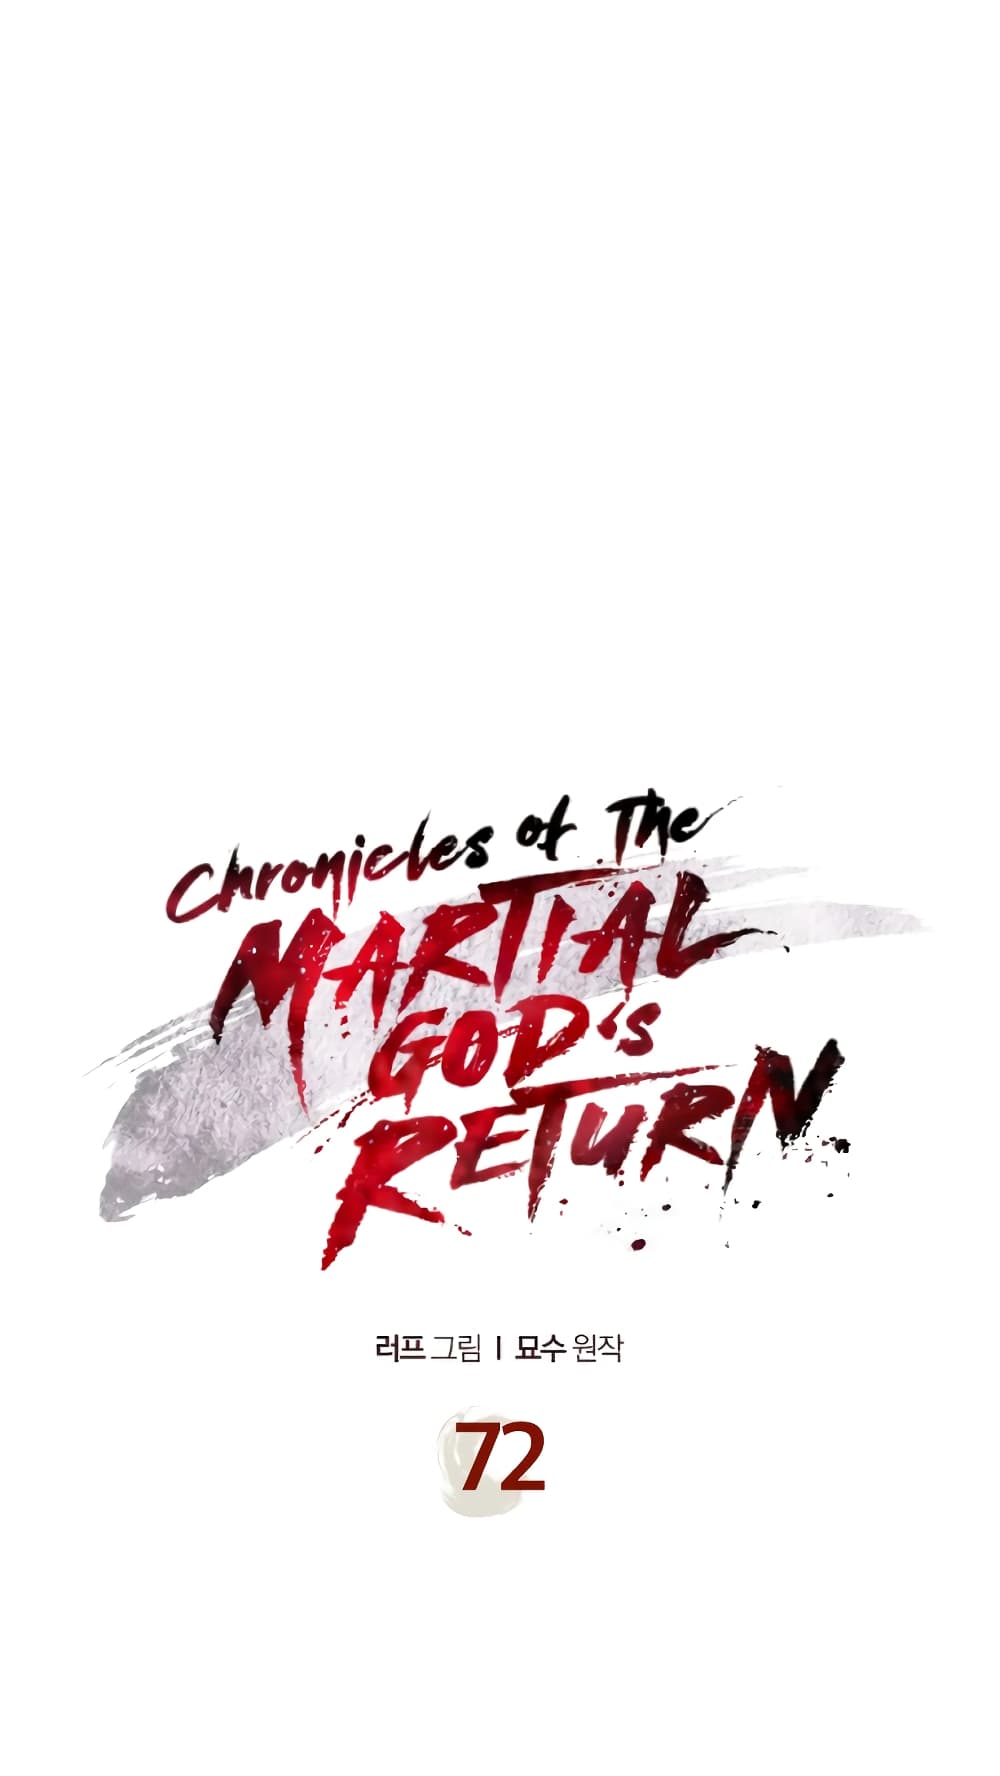 Chronicles Of The Martial God's Return 72-72